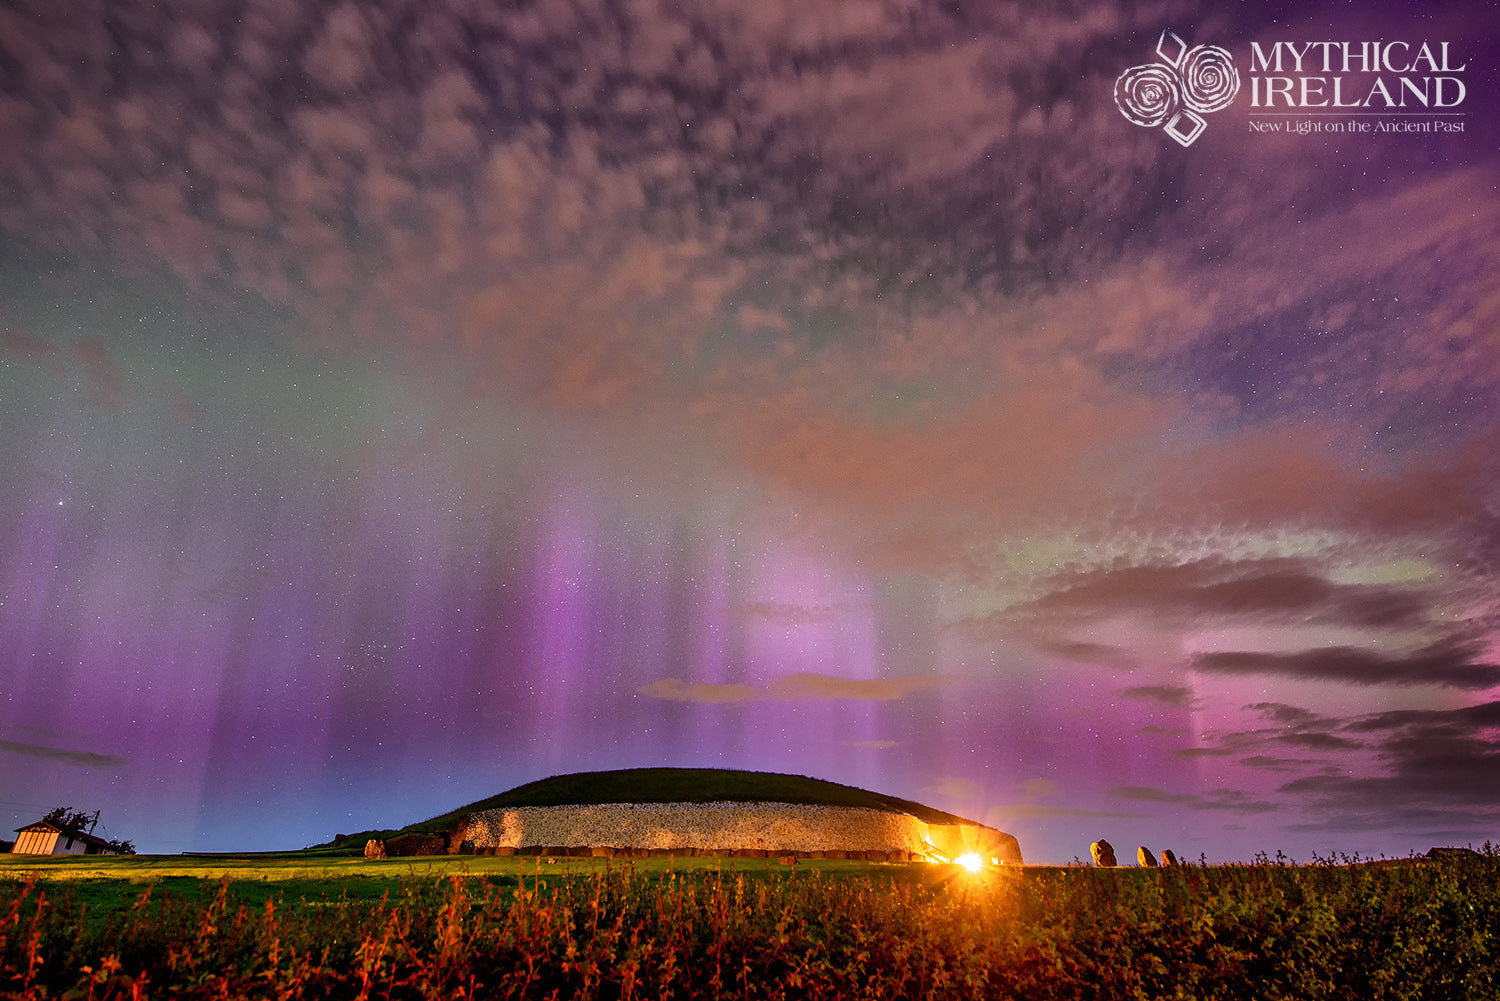 Spectacular aurora borealis over Newgrange